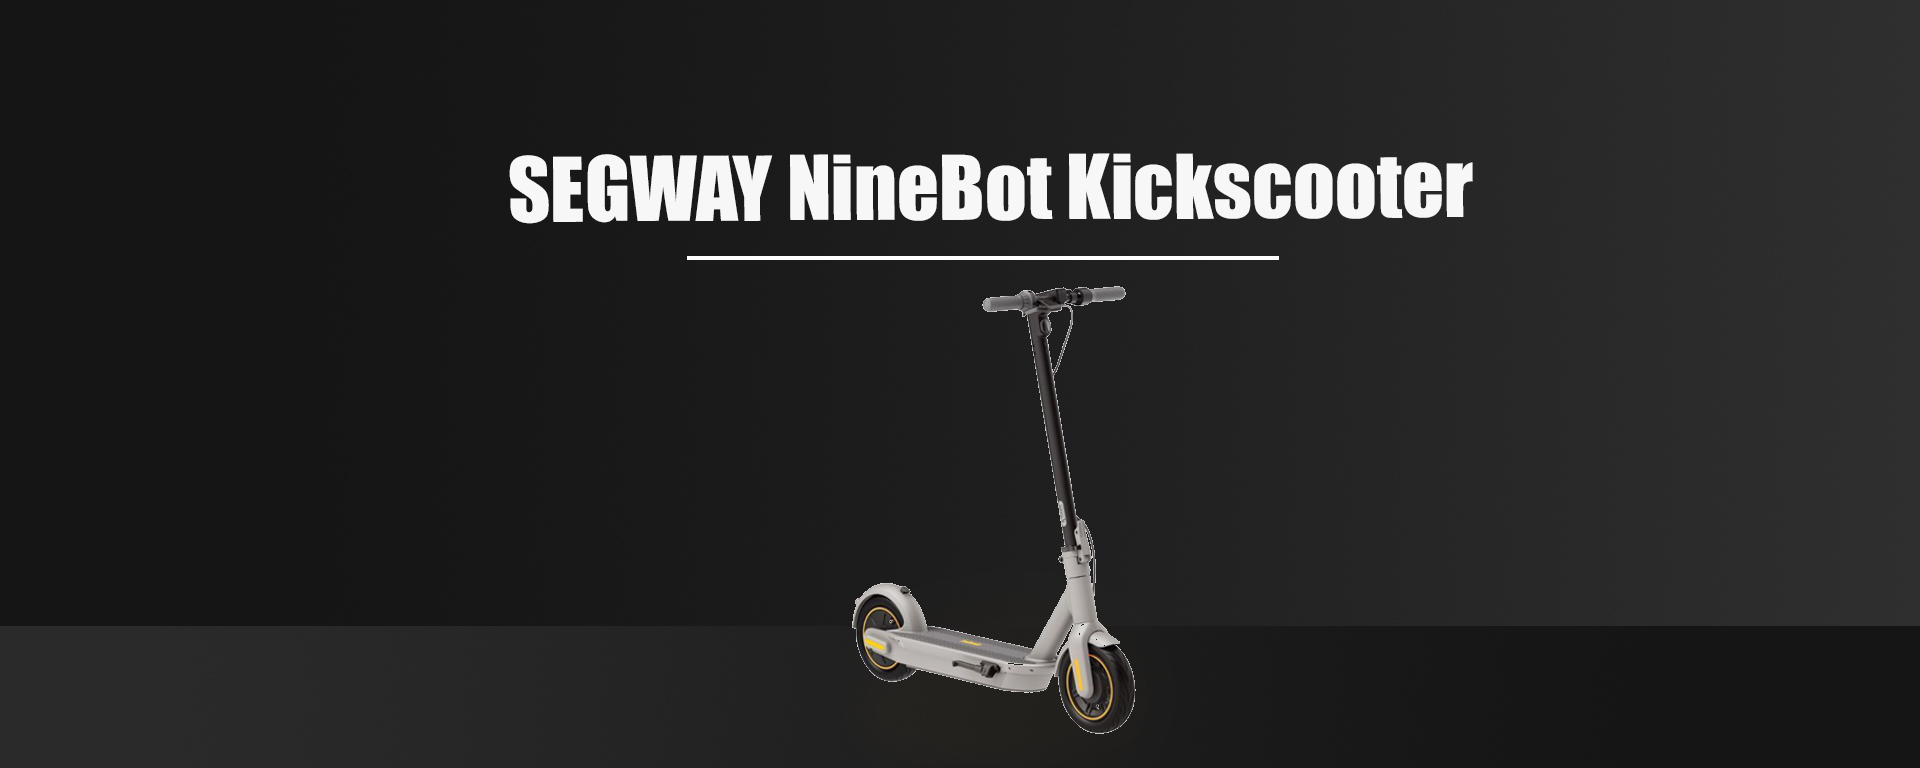 Segway Ninebot Kickscooter MAX 